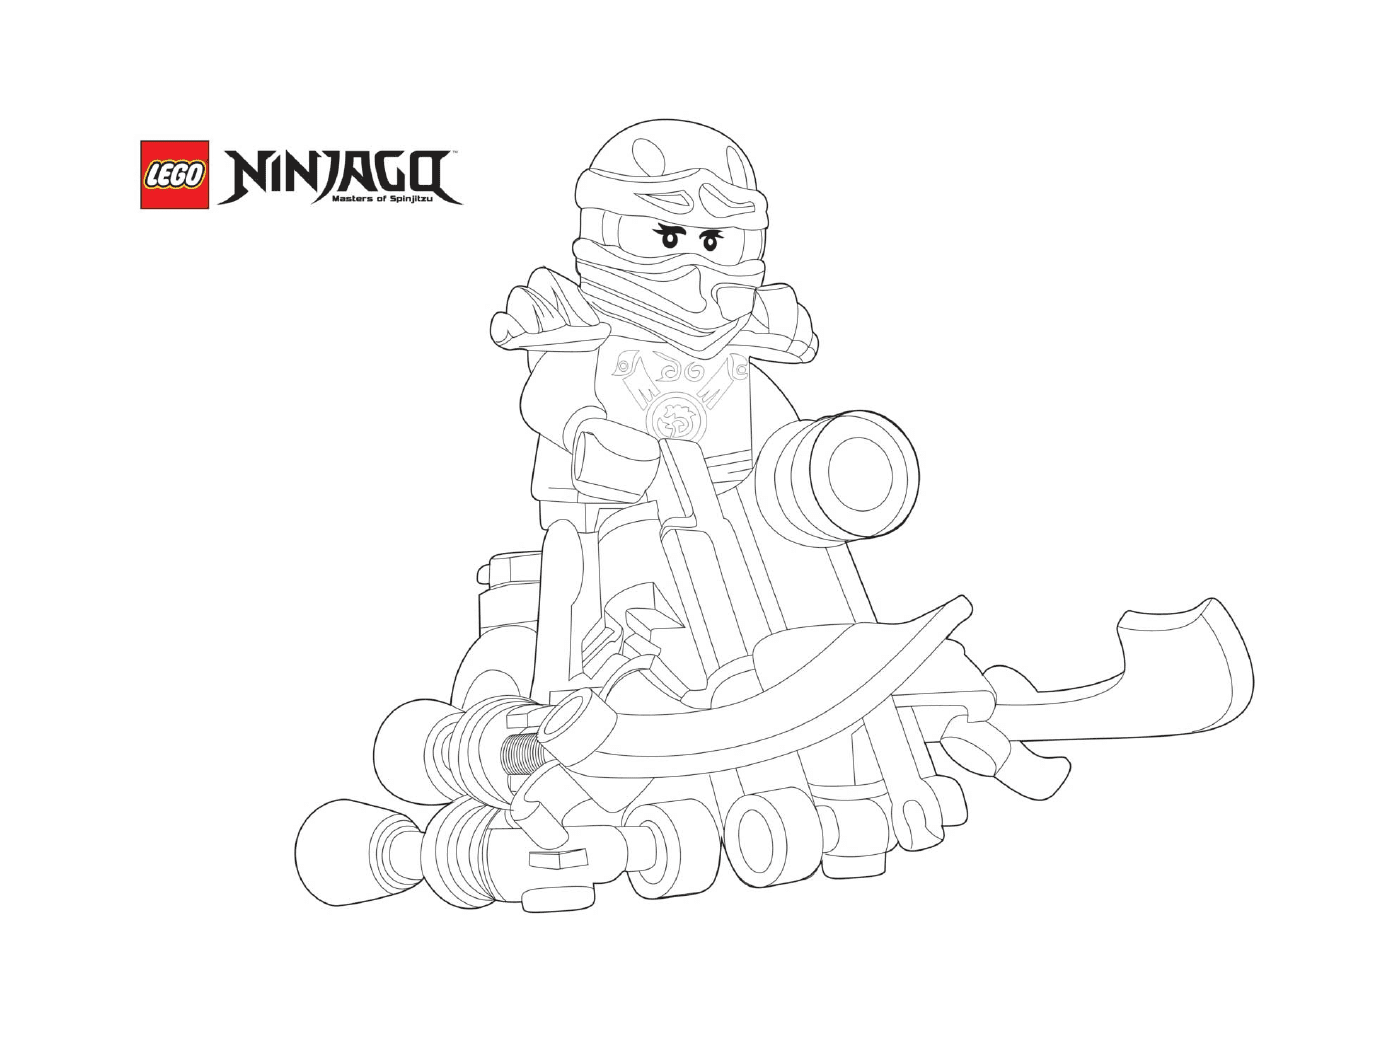  Ninjago on a flying motorcycle 